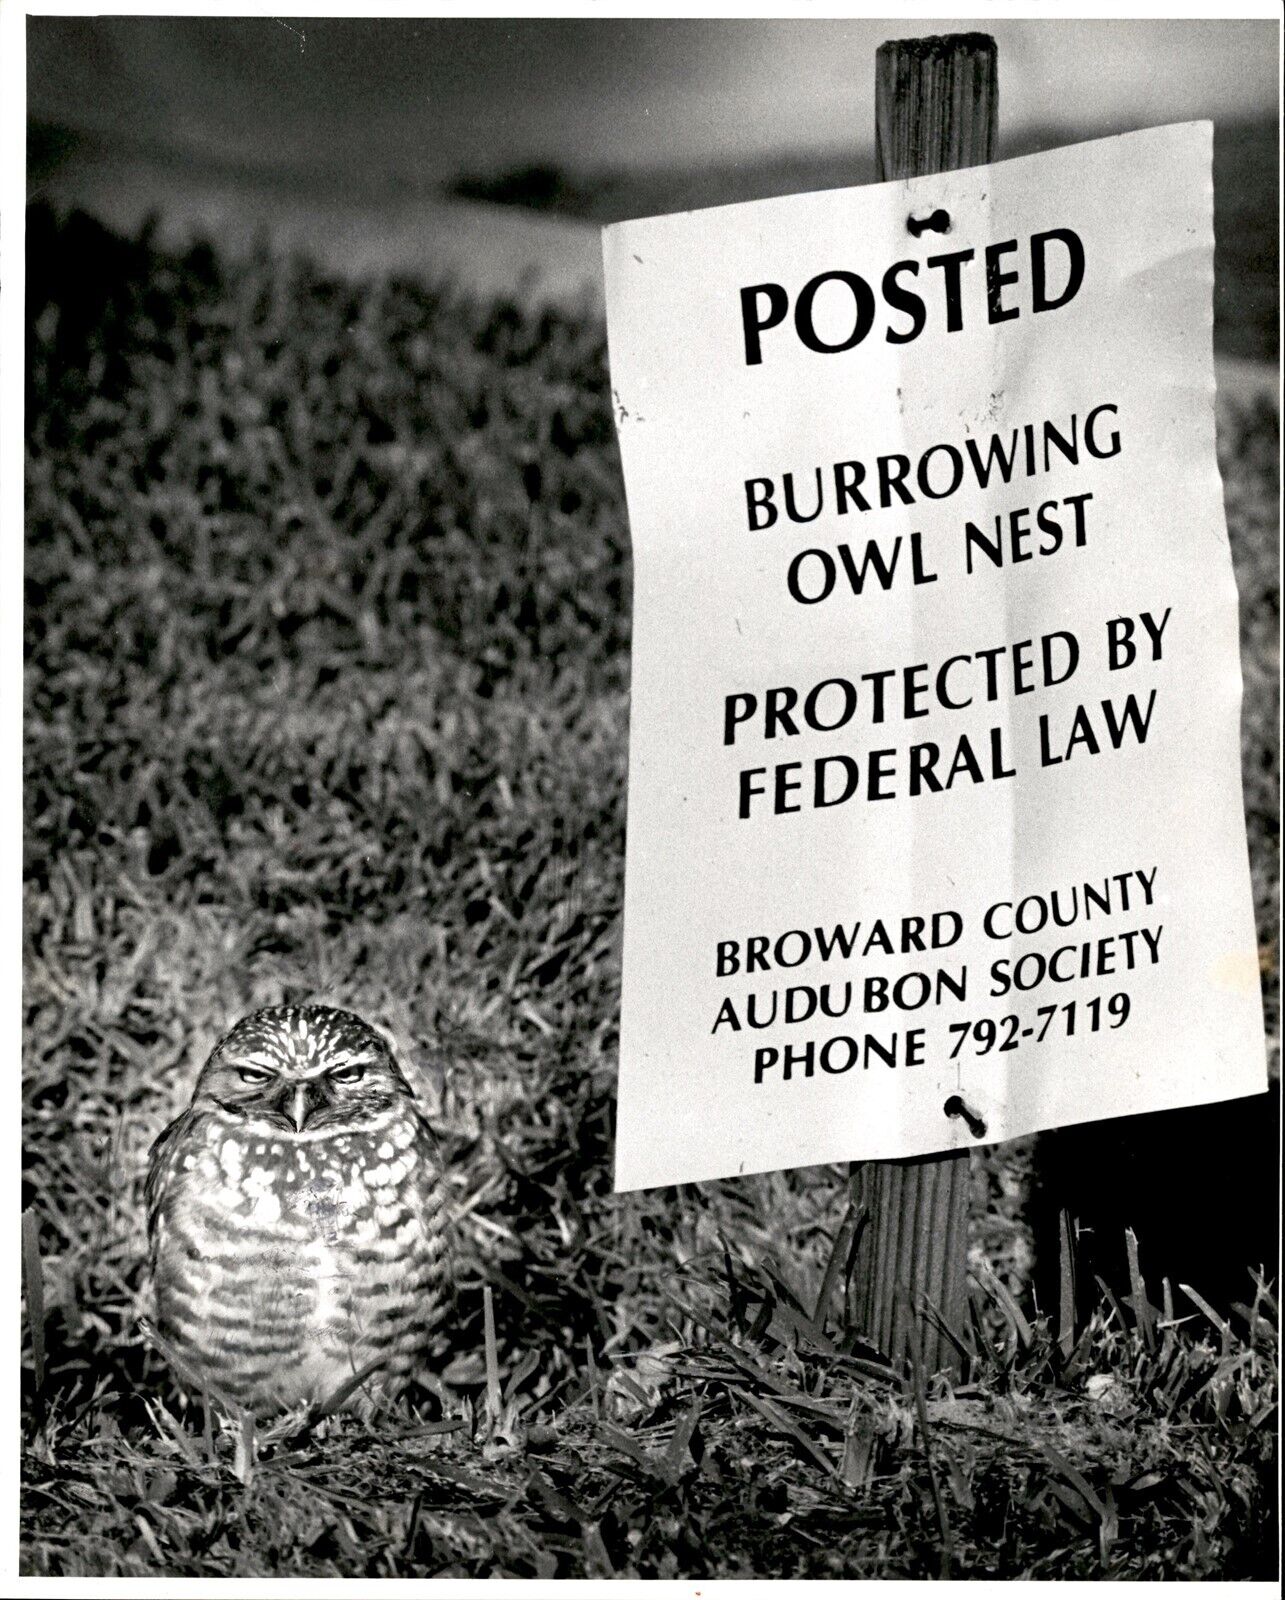 LG26 1985 Original Freund Photo BURROWING OWL NEST PROTECTED SPECIES FLORIDA